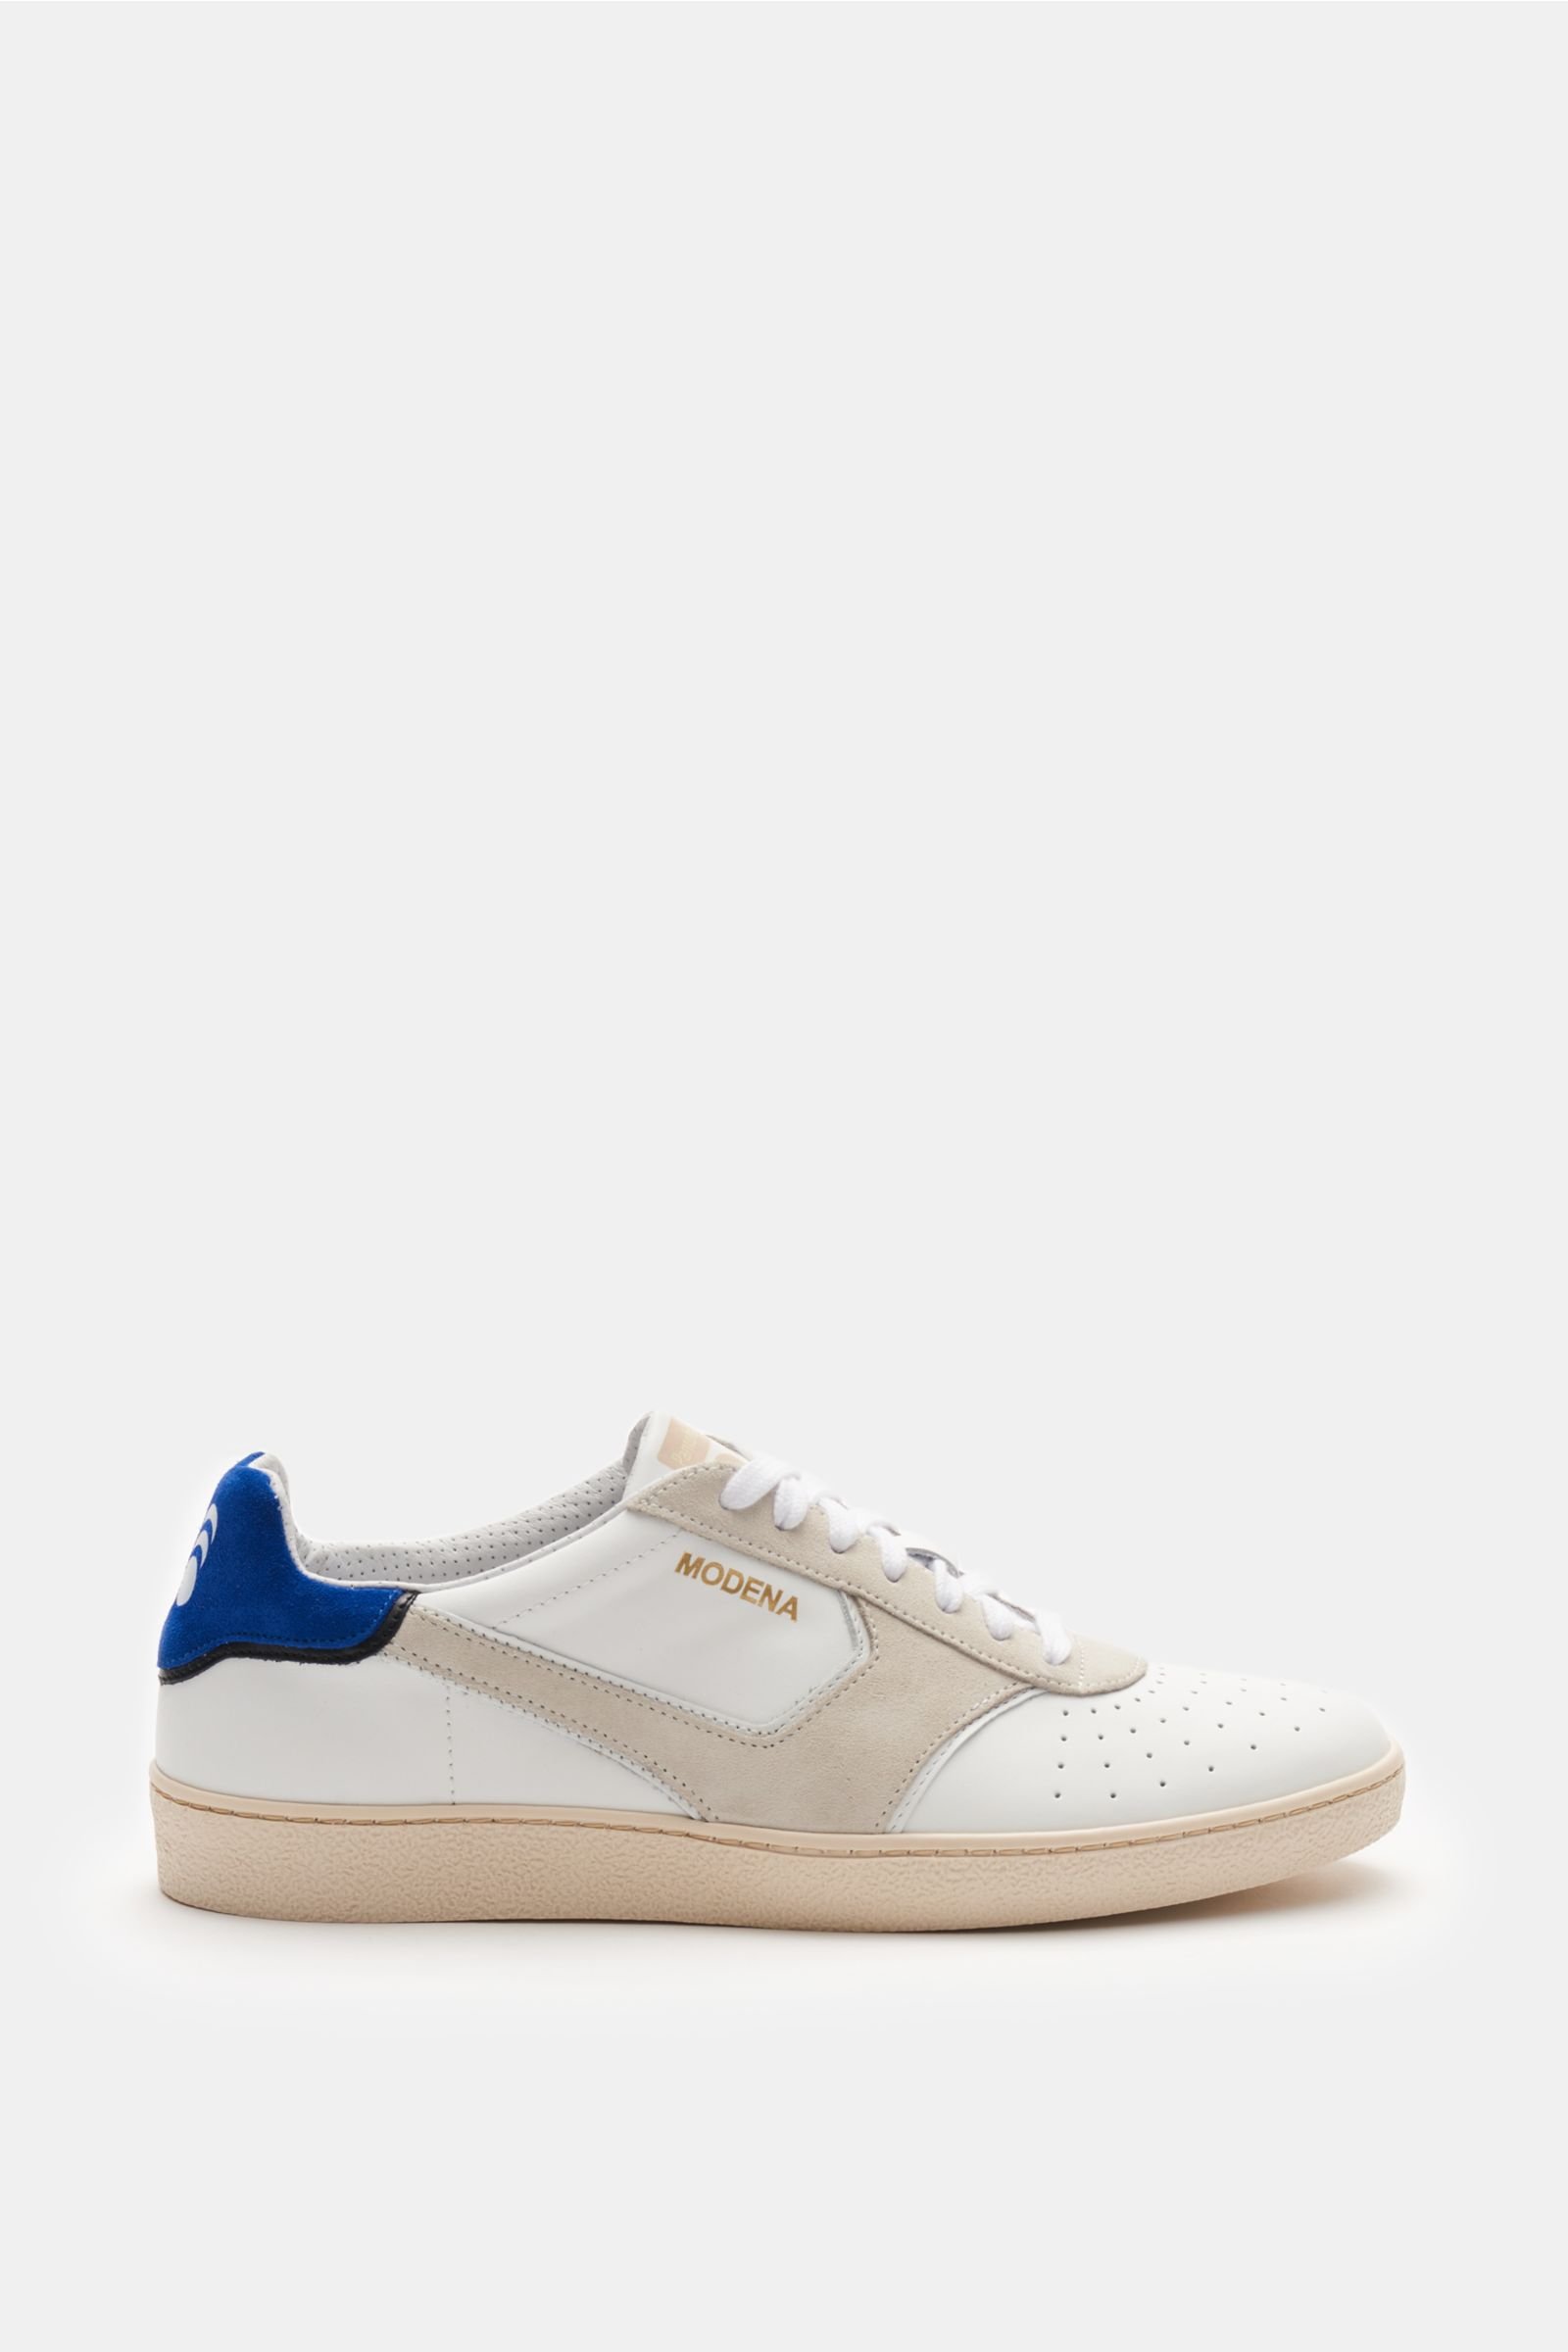 Sneakers 'Modena' white/blue